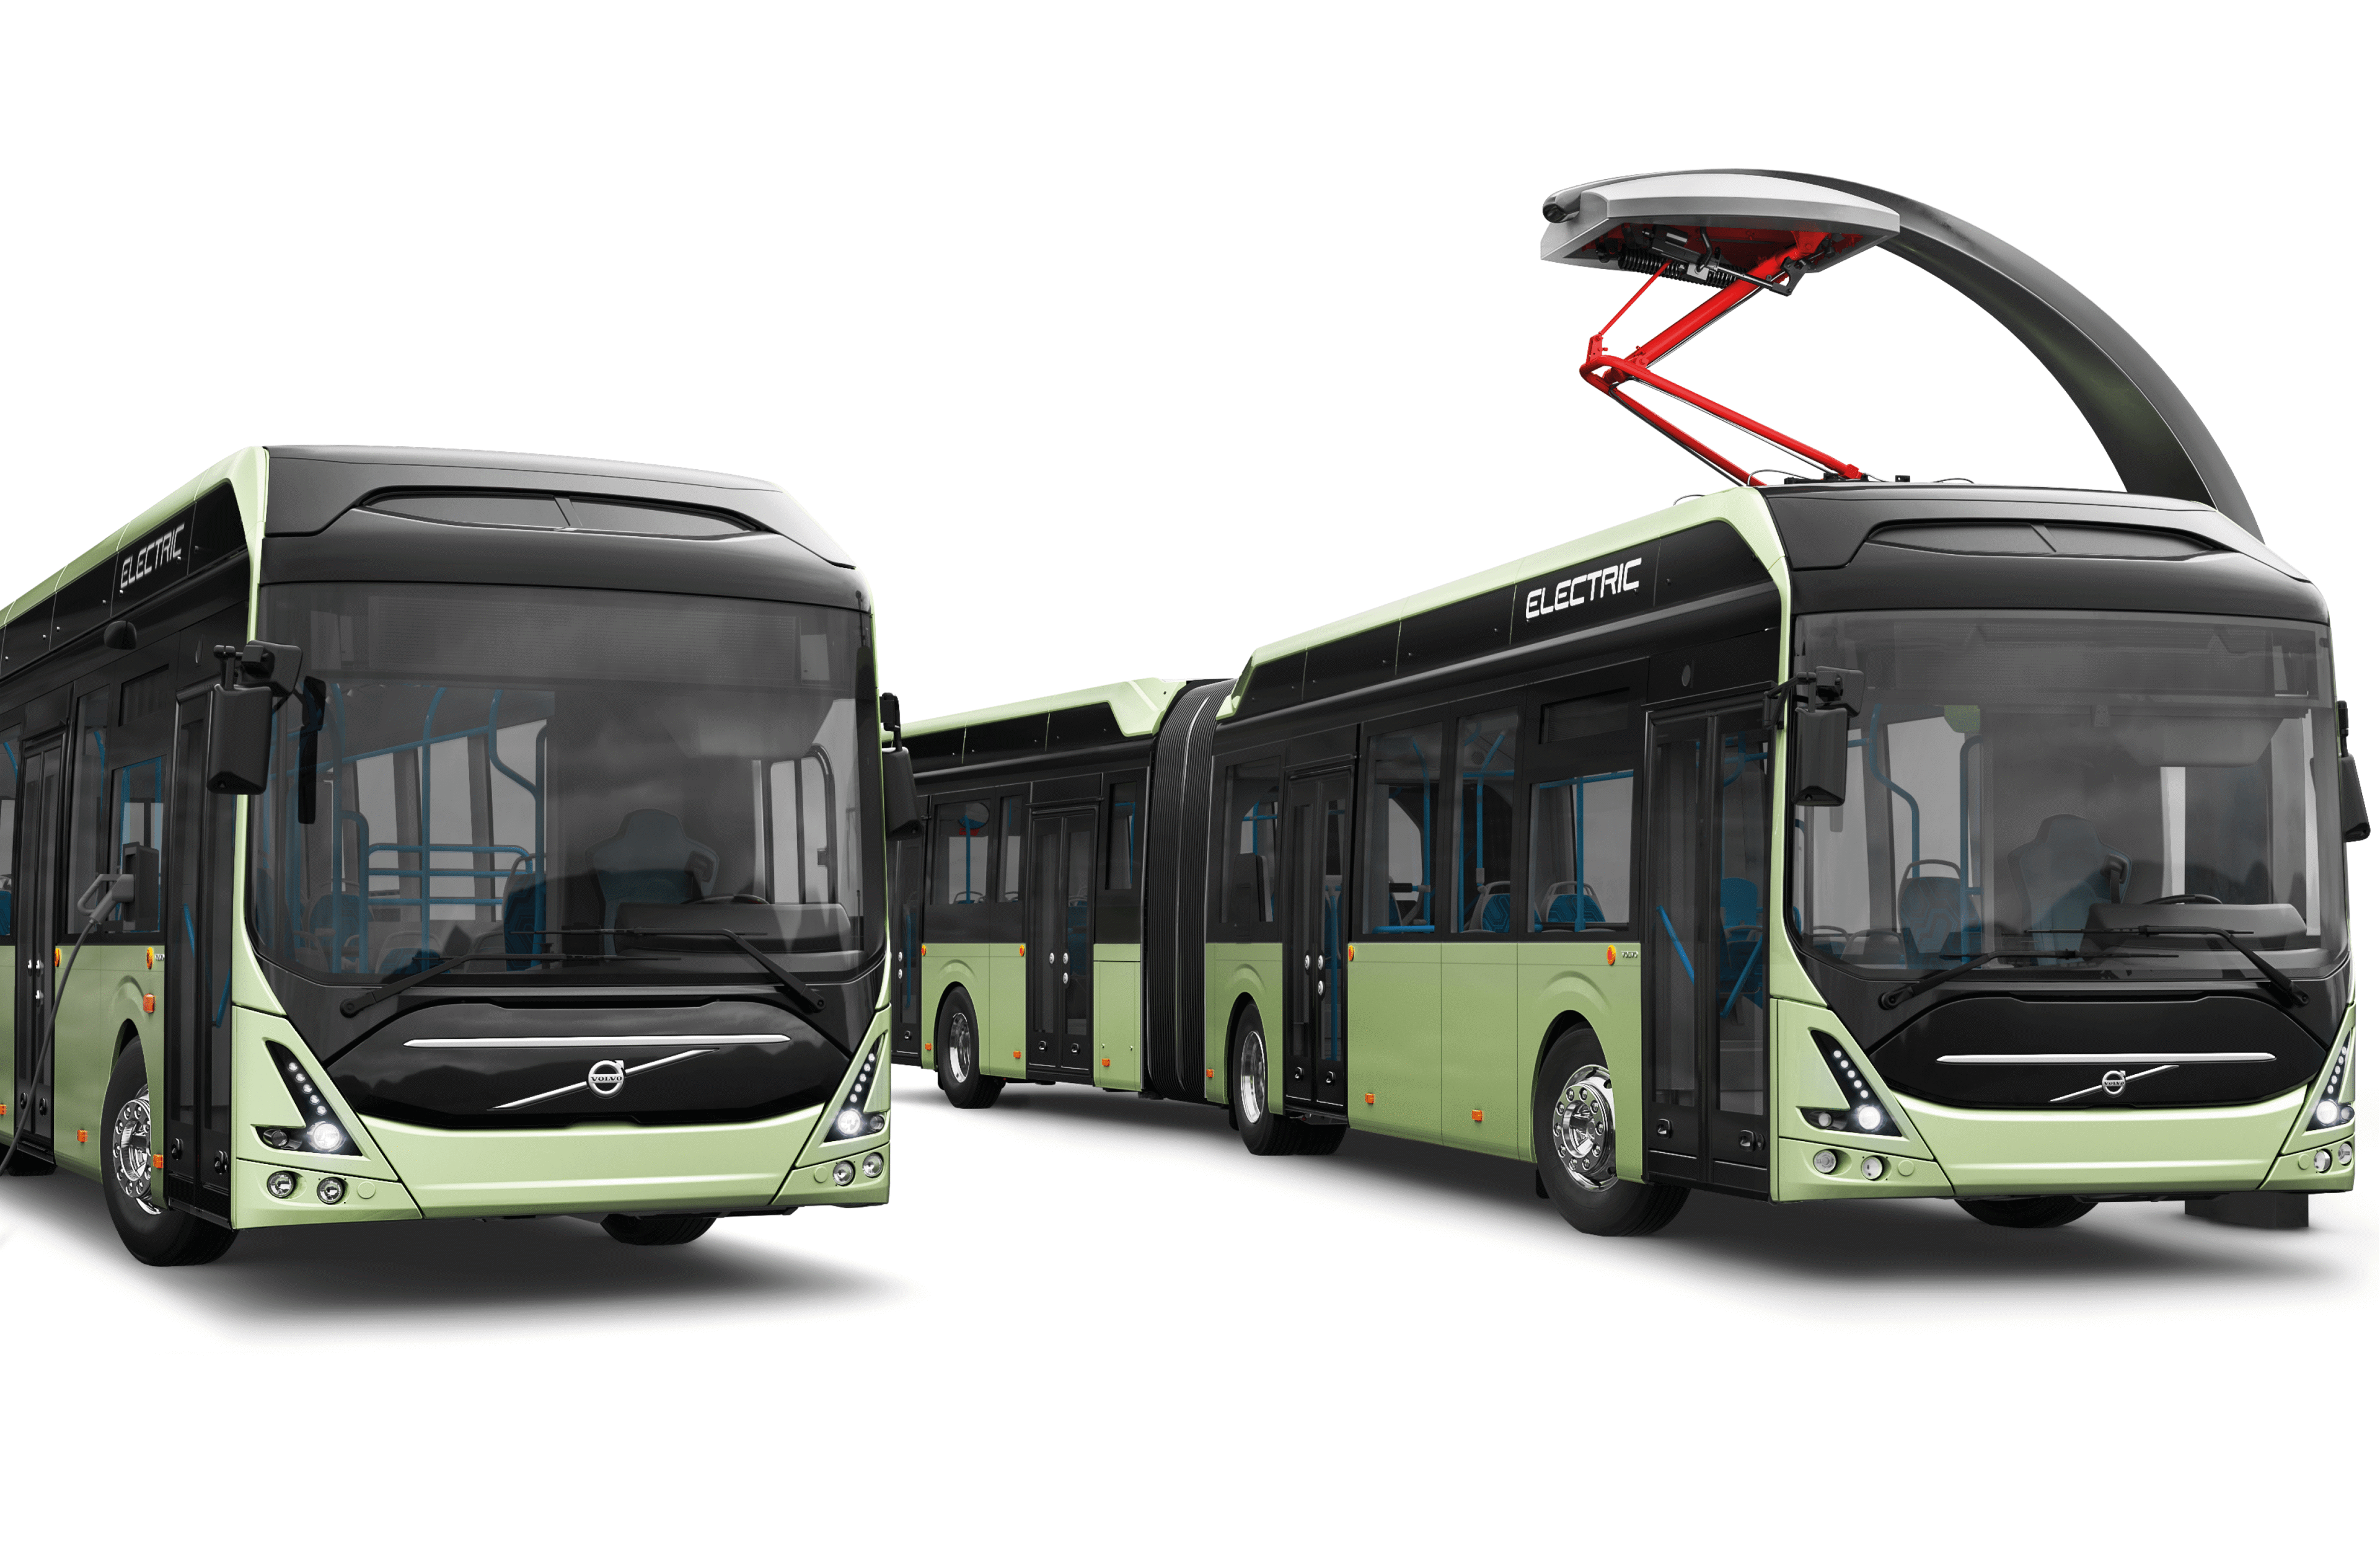 Camira StaySafe to feature on new bus fleet in Łódź